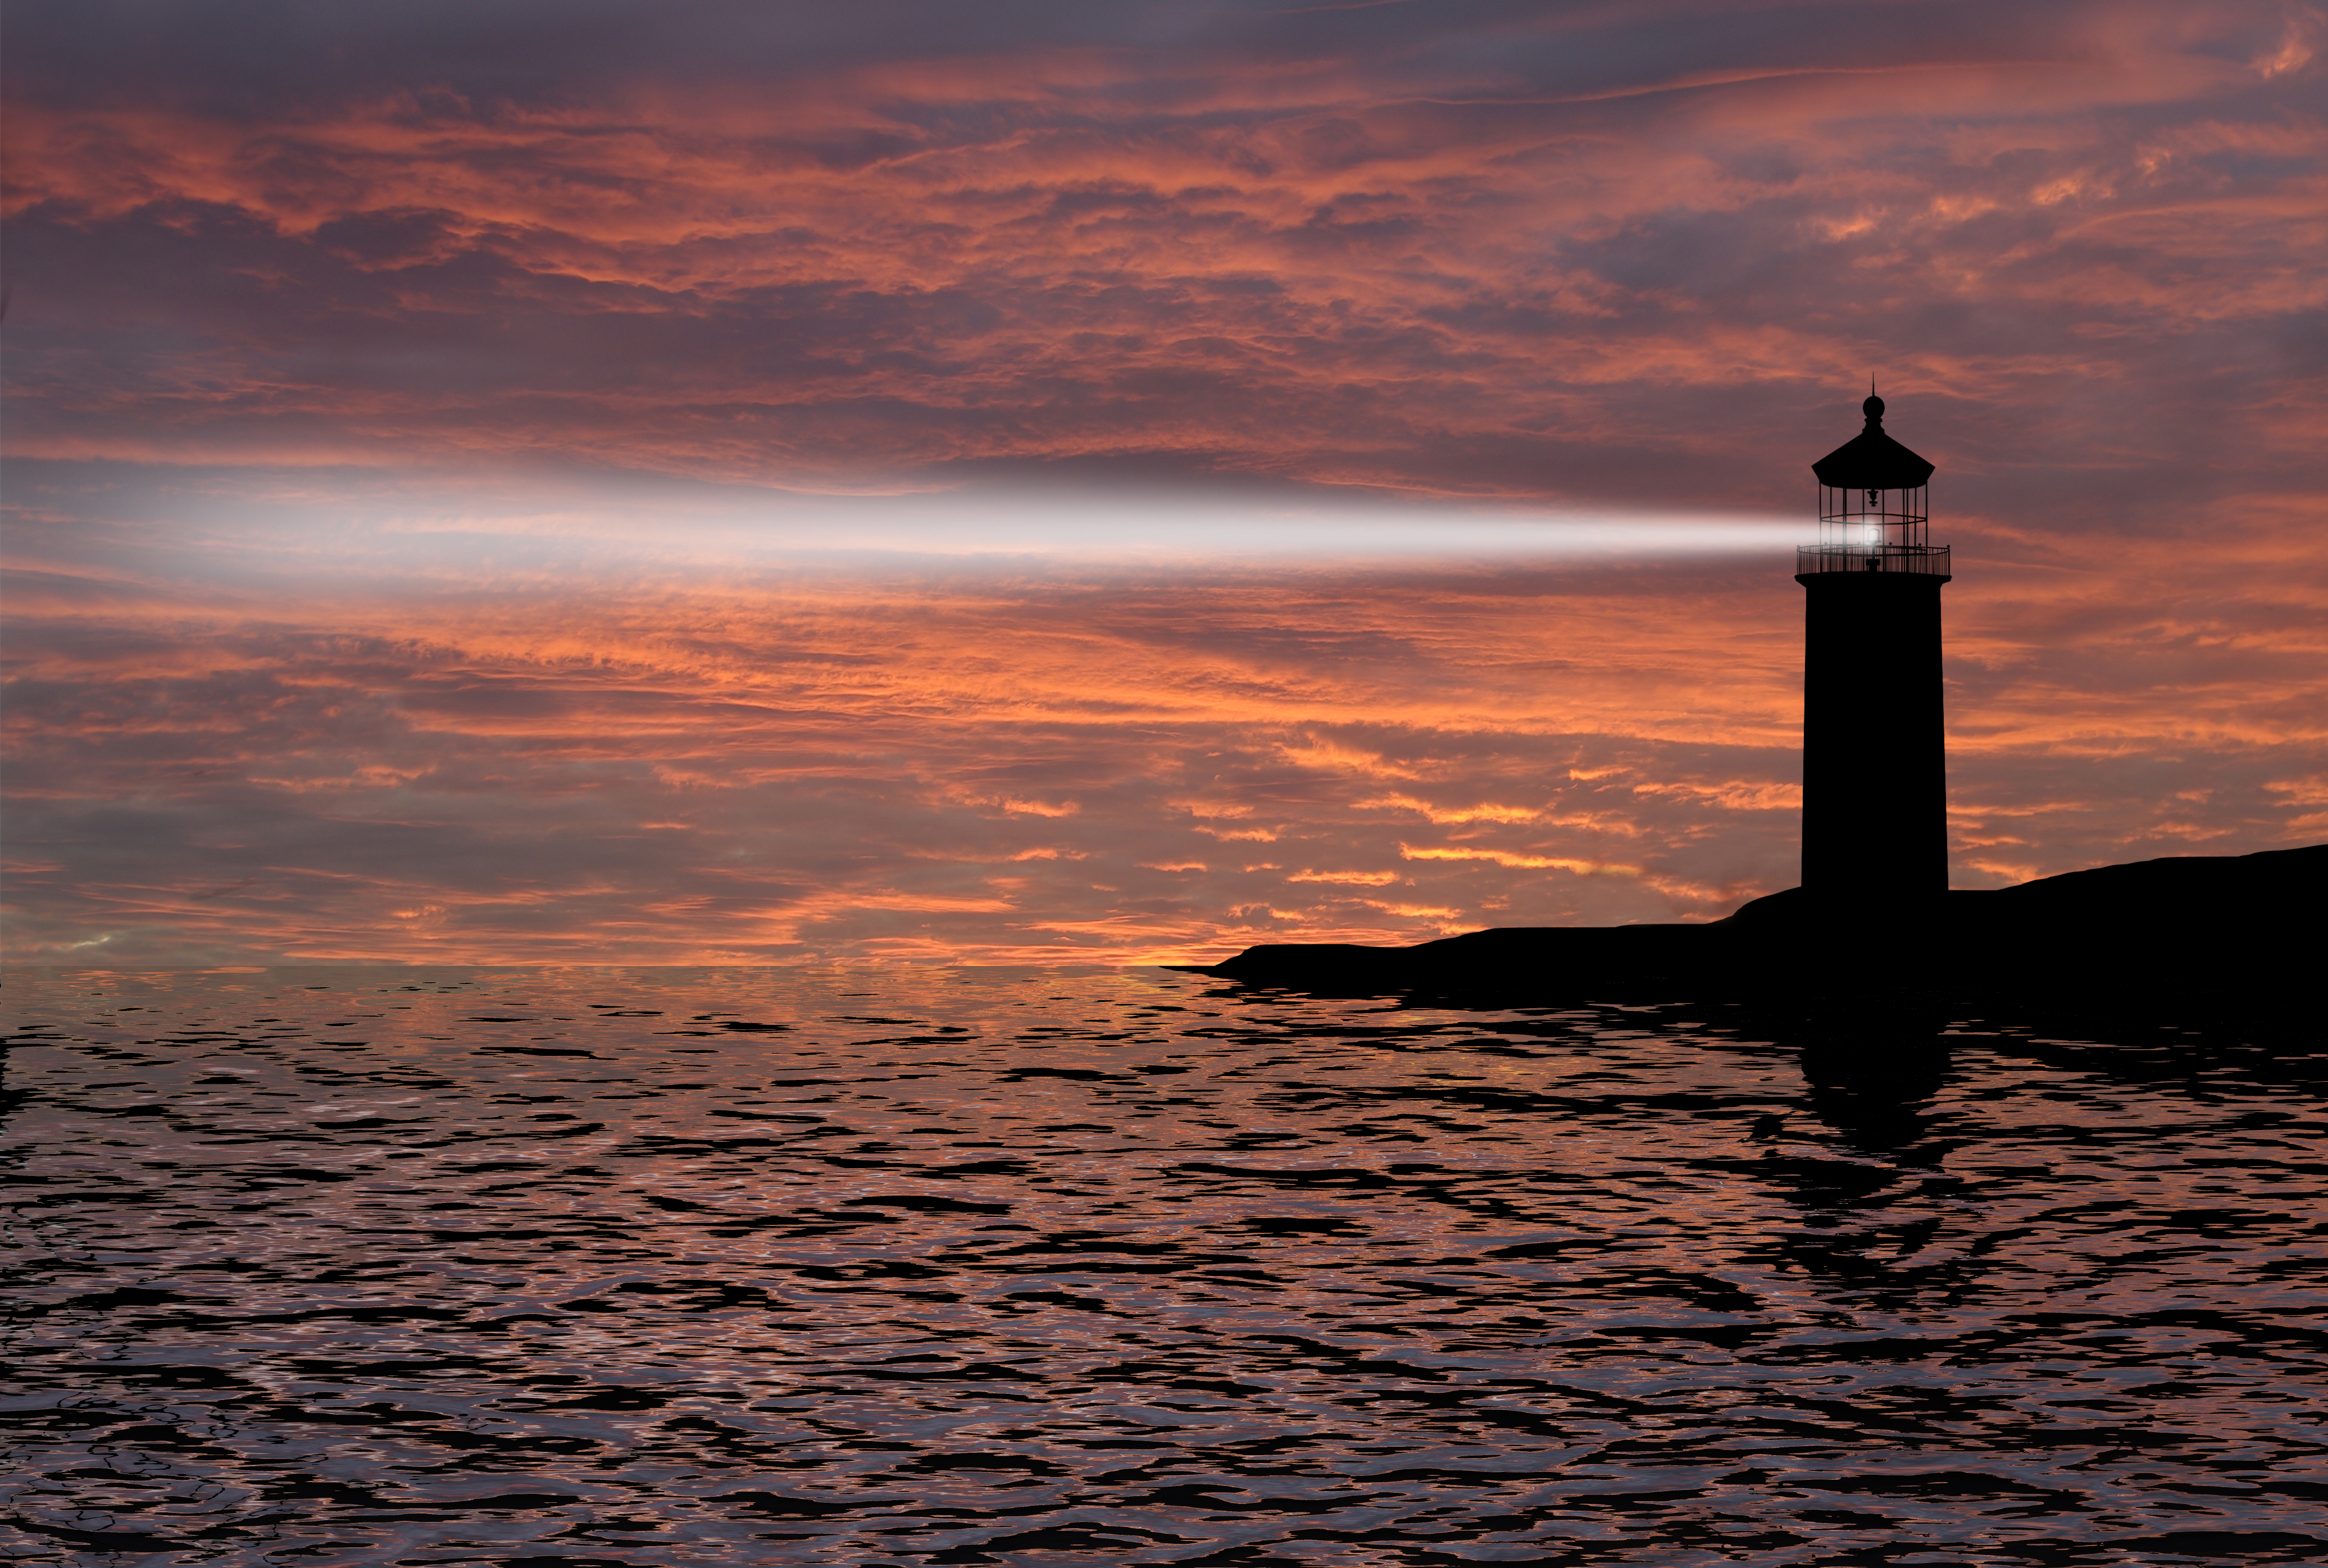 Lighthouse searchlight beam through marine air at night.